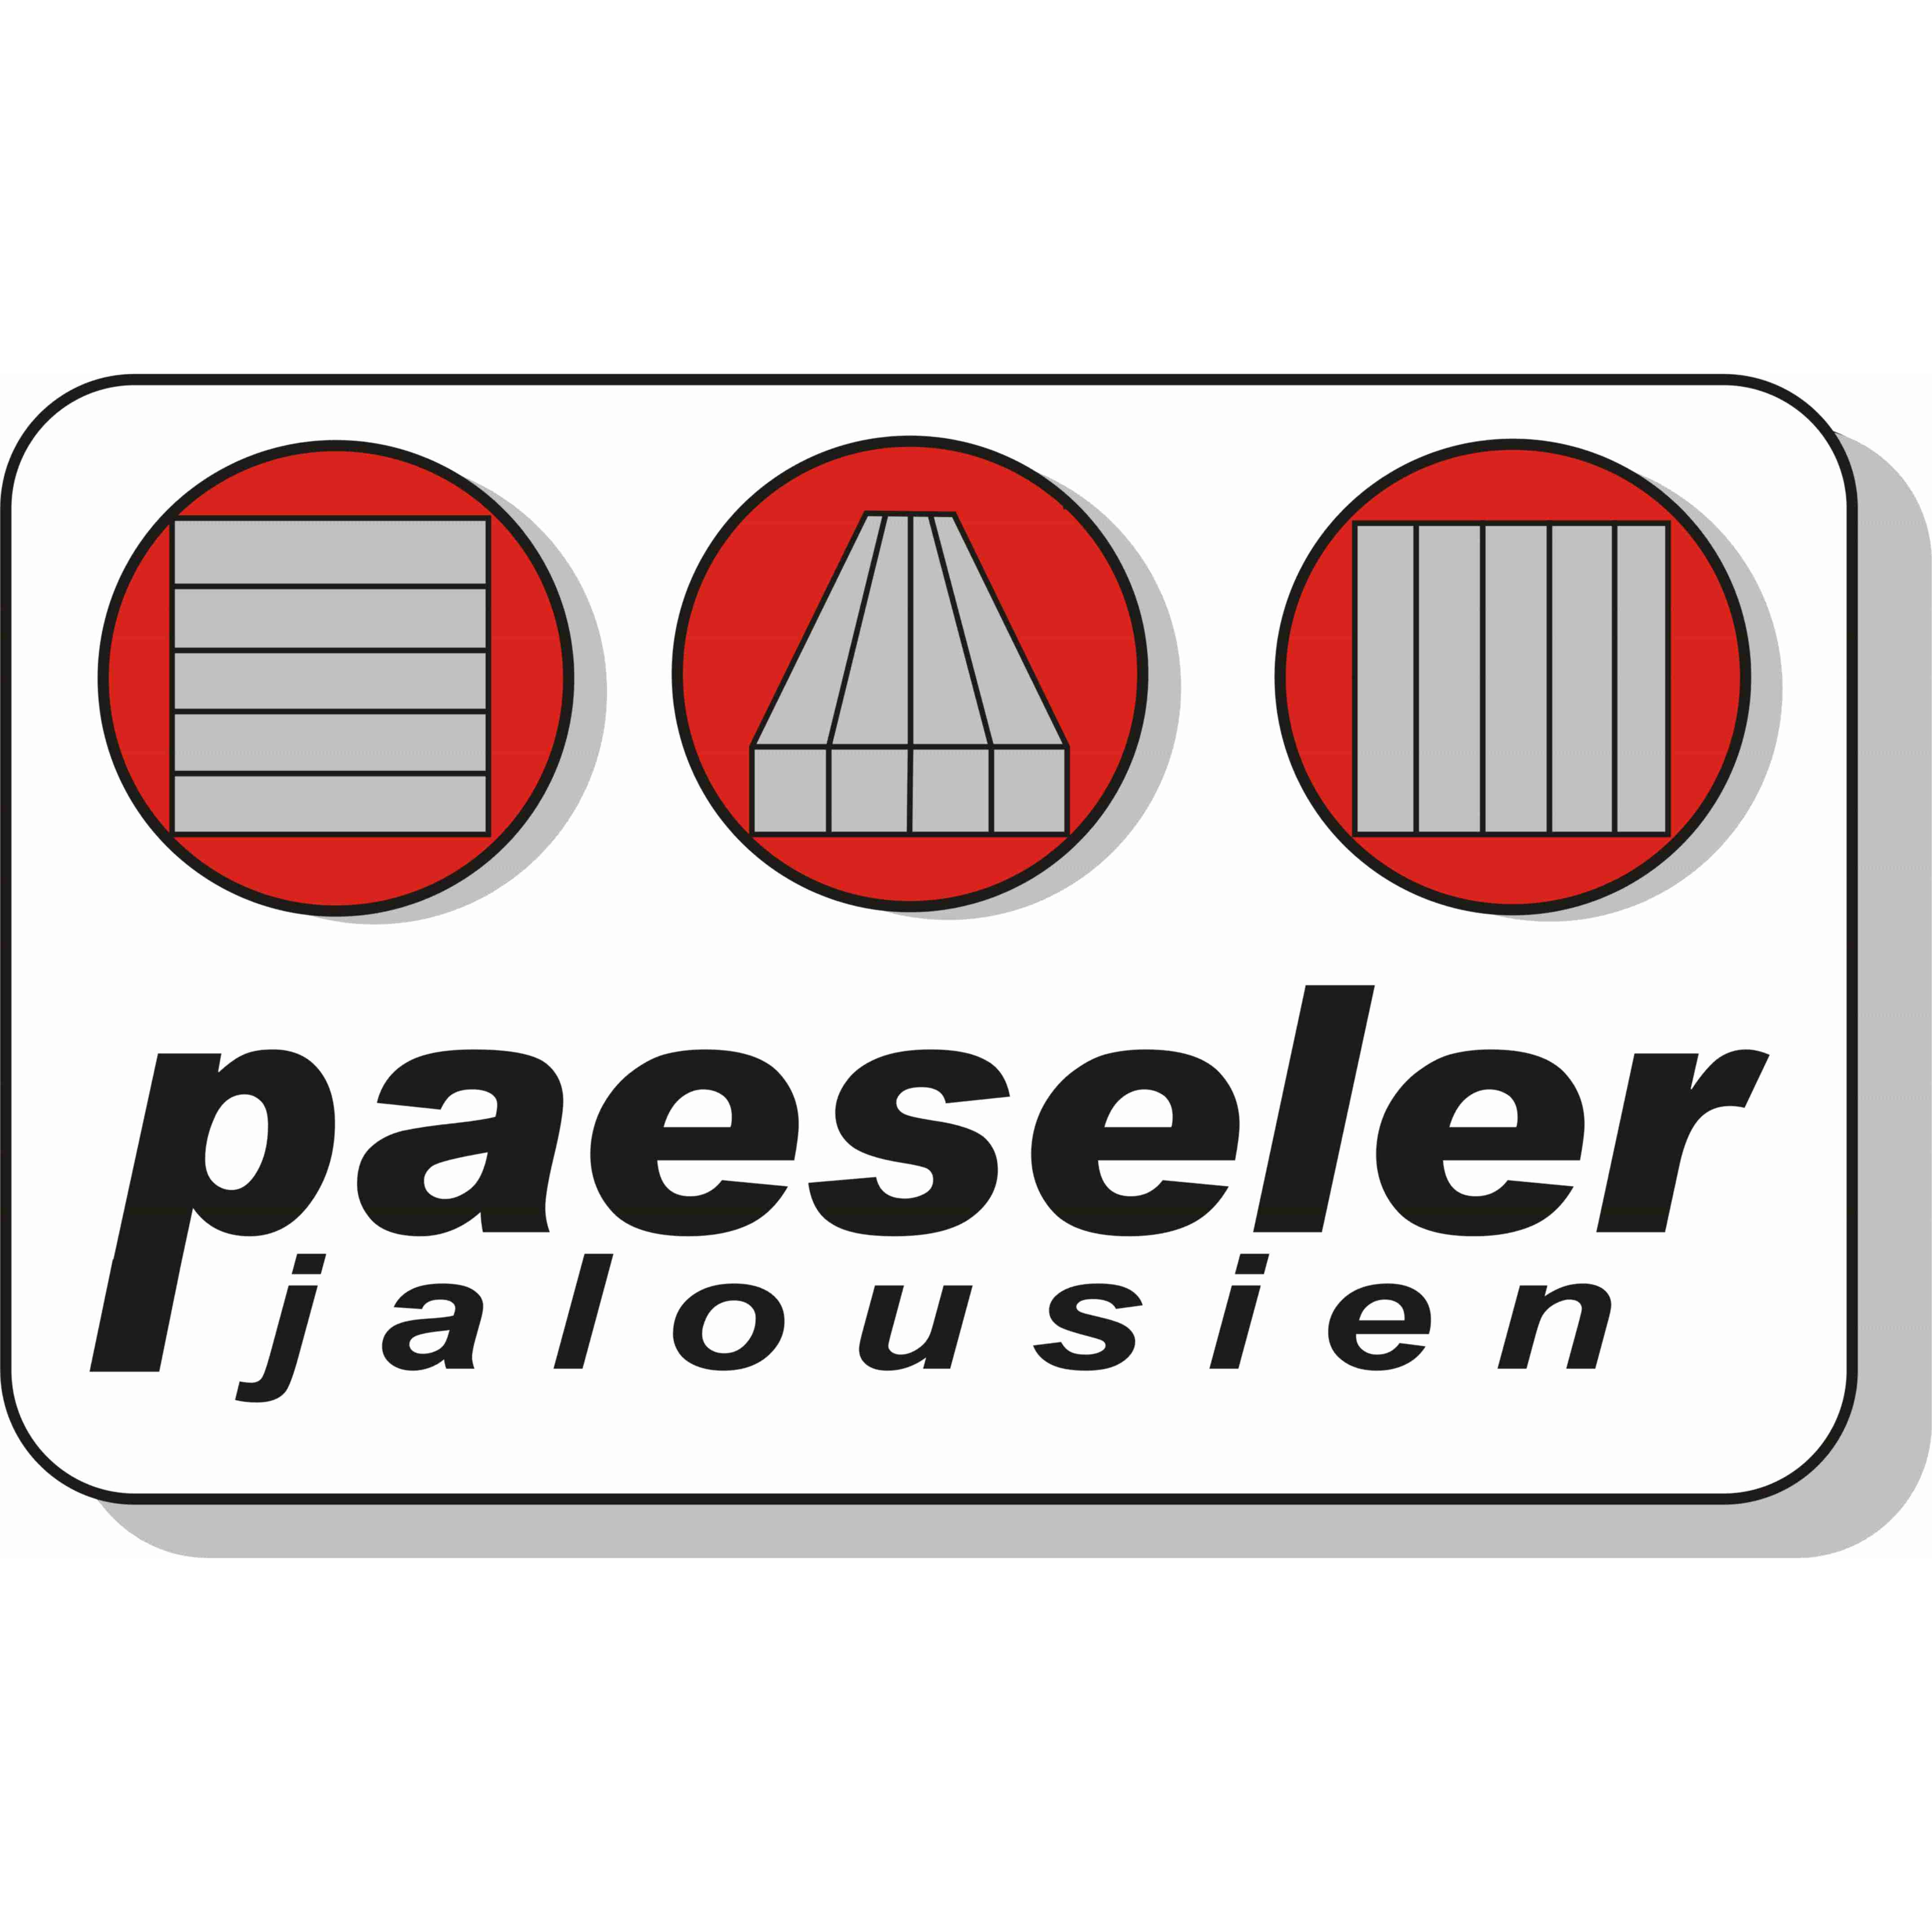 Paeseler Jalousien in Berlin - Logo